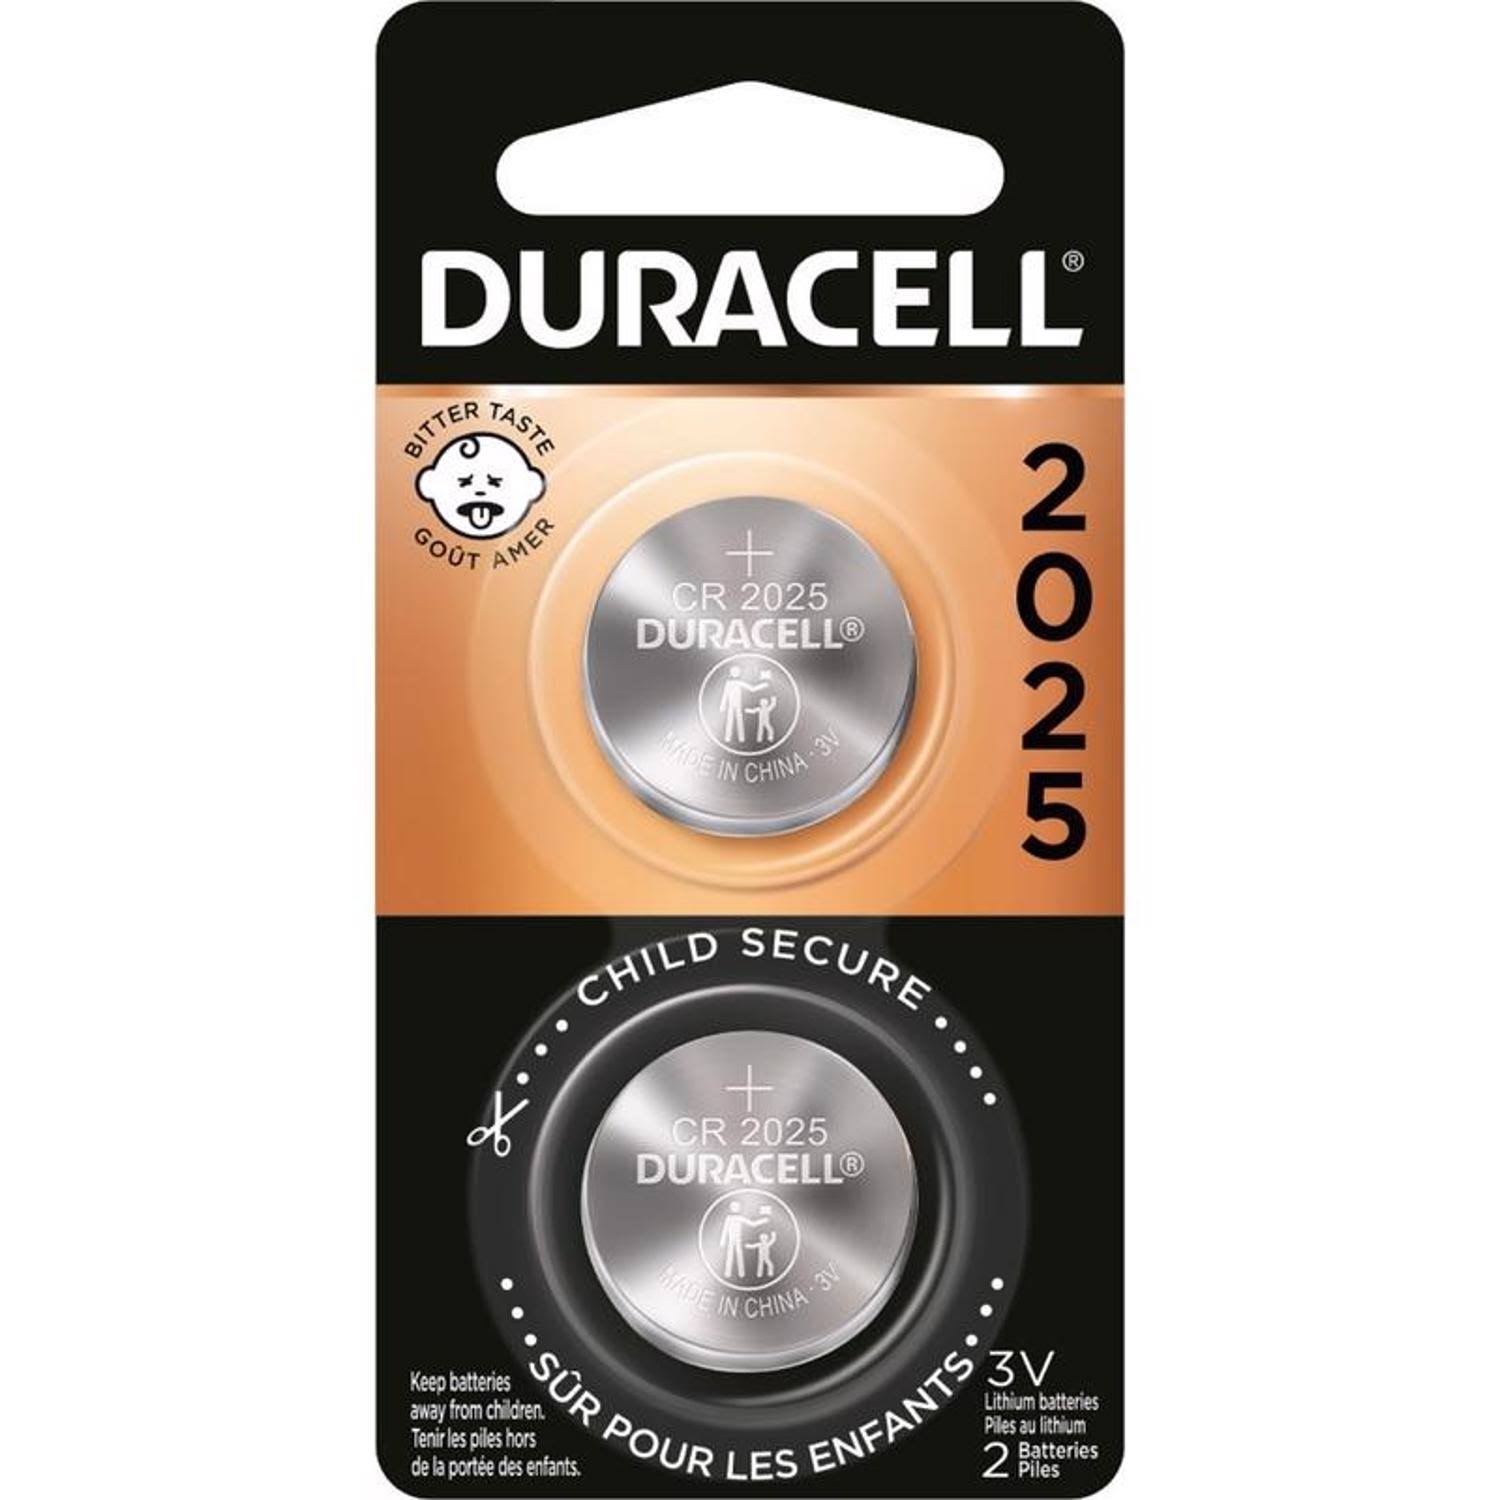 Duracell Coin Button 2025 Battery - 3V, x2